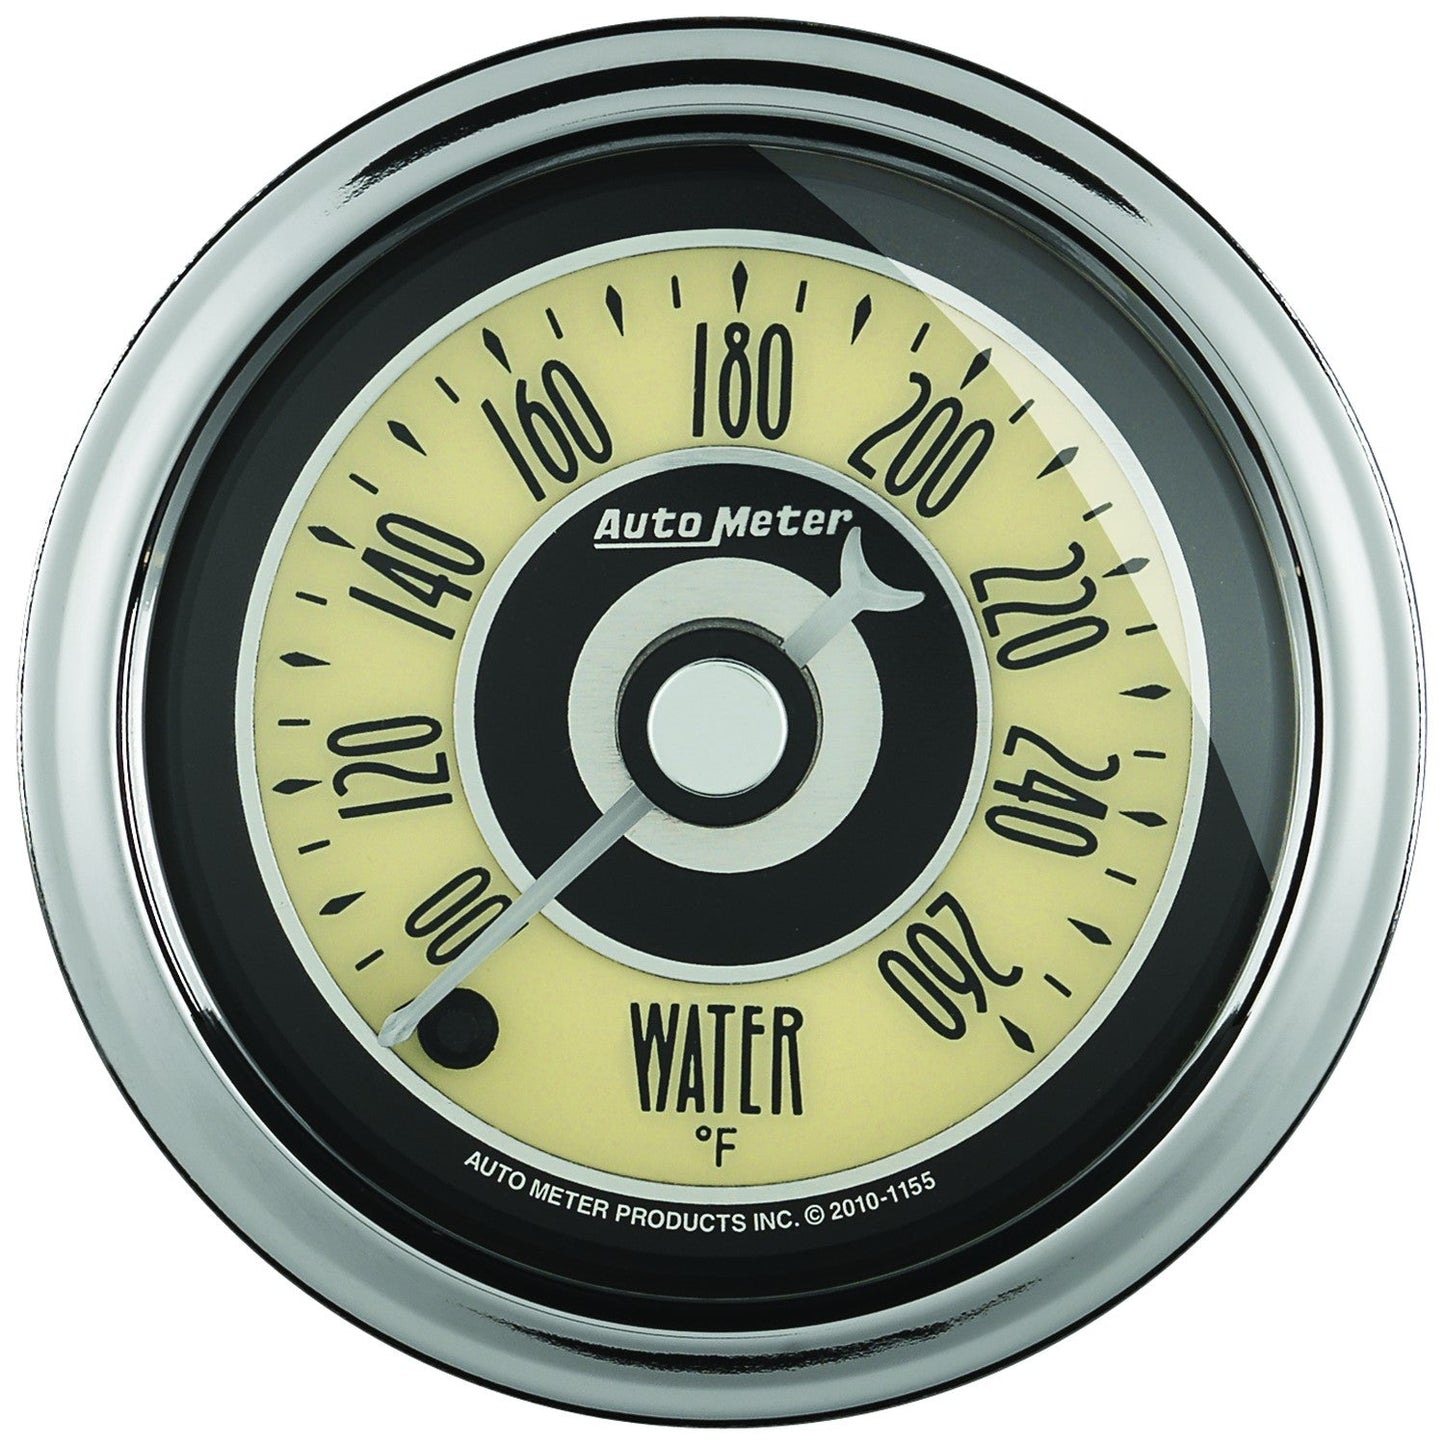 AutoMeter - 2-1/16" WATER TEMPERATURE, 100-260 °F, STEPPER MOTOR, CRUISER AD (1154)